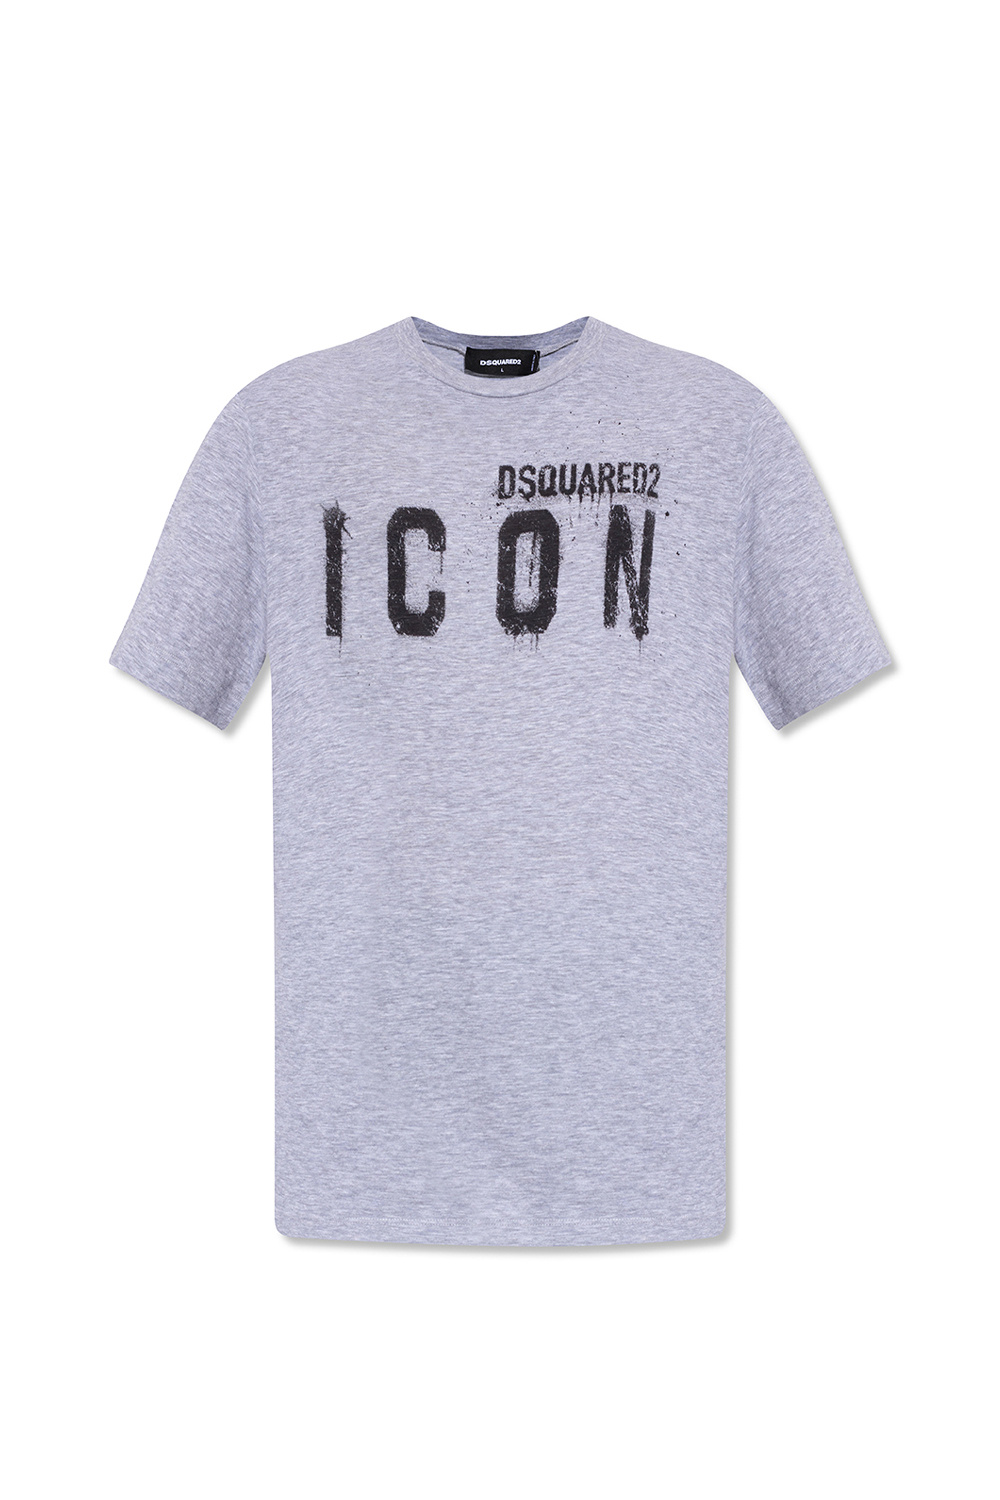 Dsquared2 Printed T-shirt | Men's Clothing | Vitkac